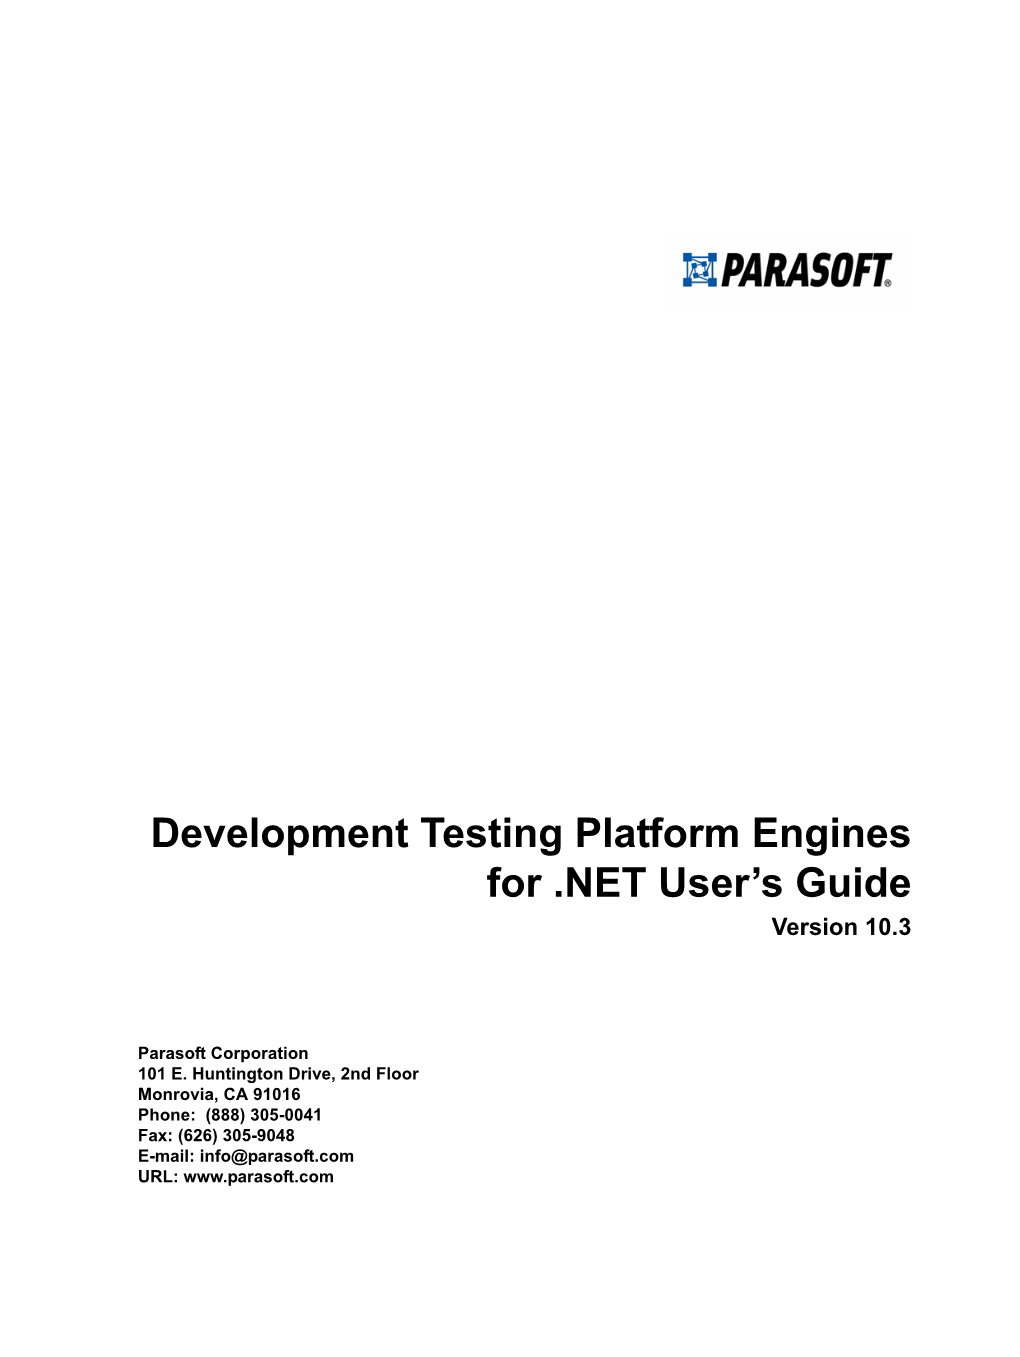 Development Testing Platform Engines for .NET User's Guide